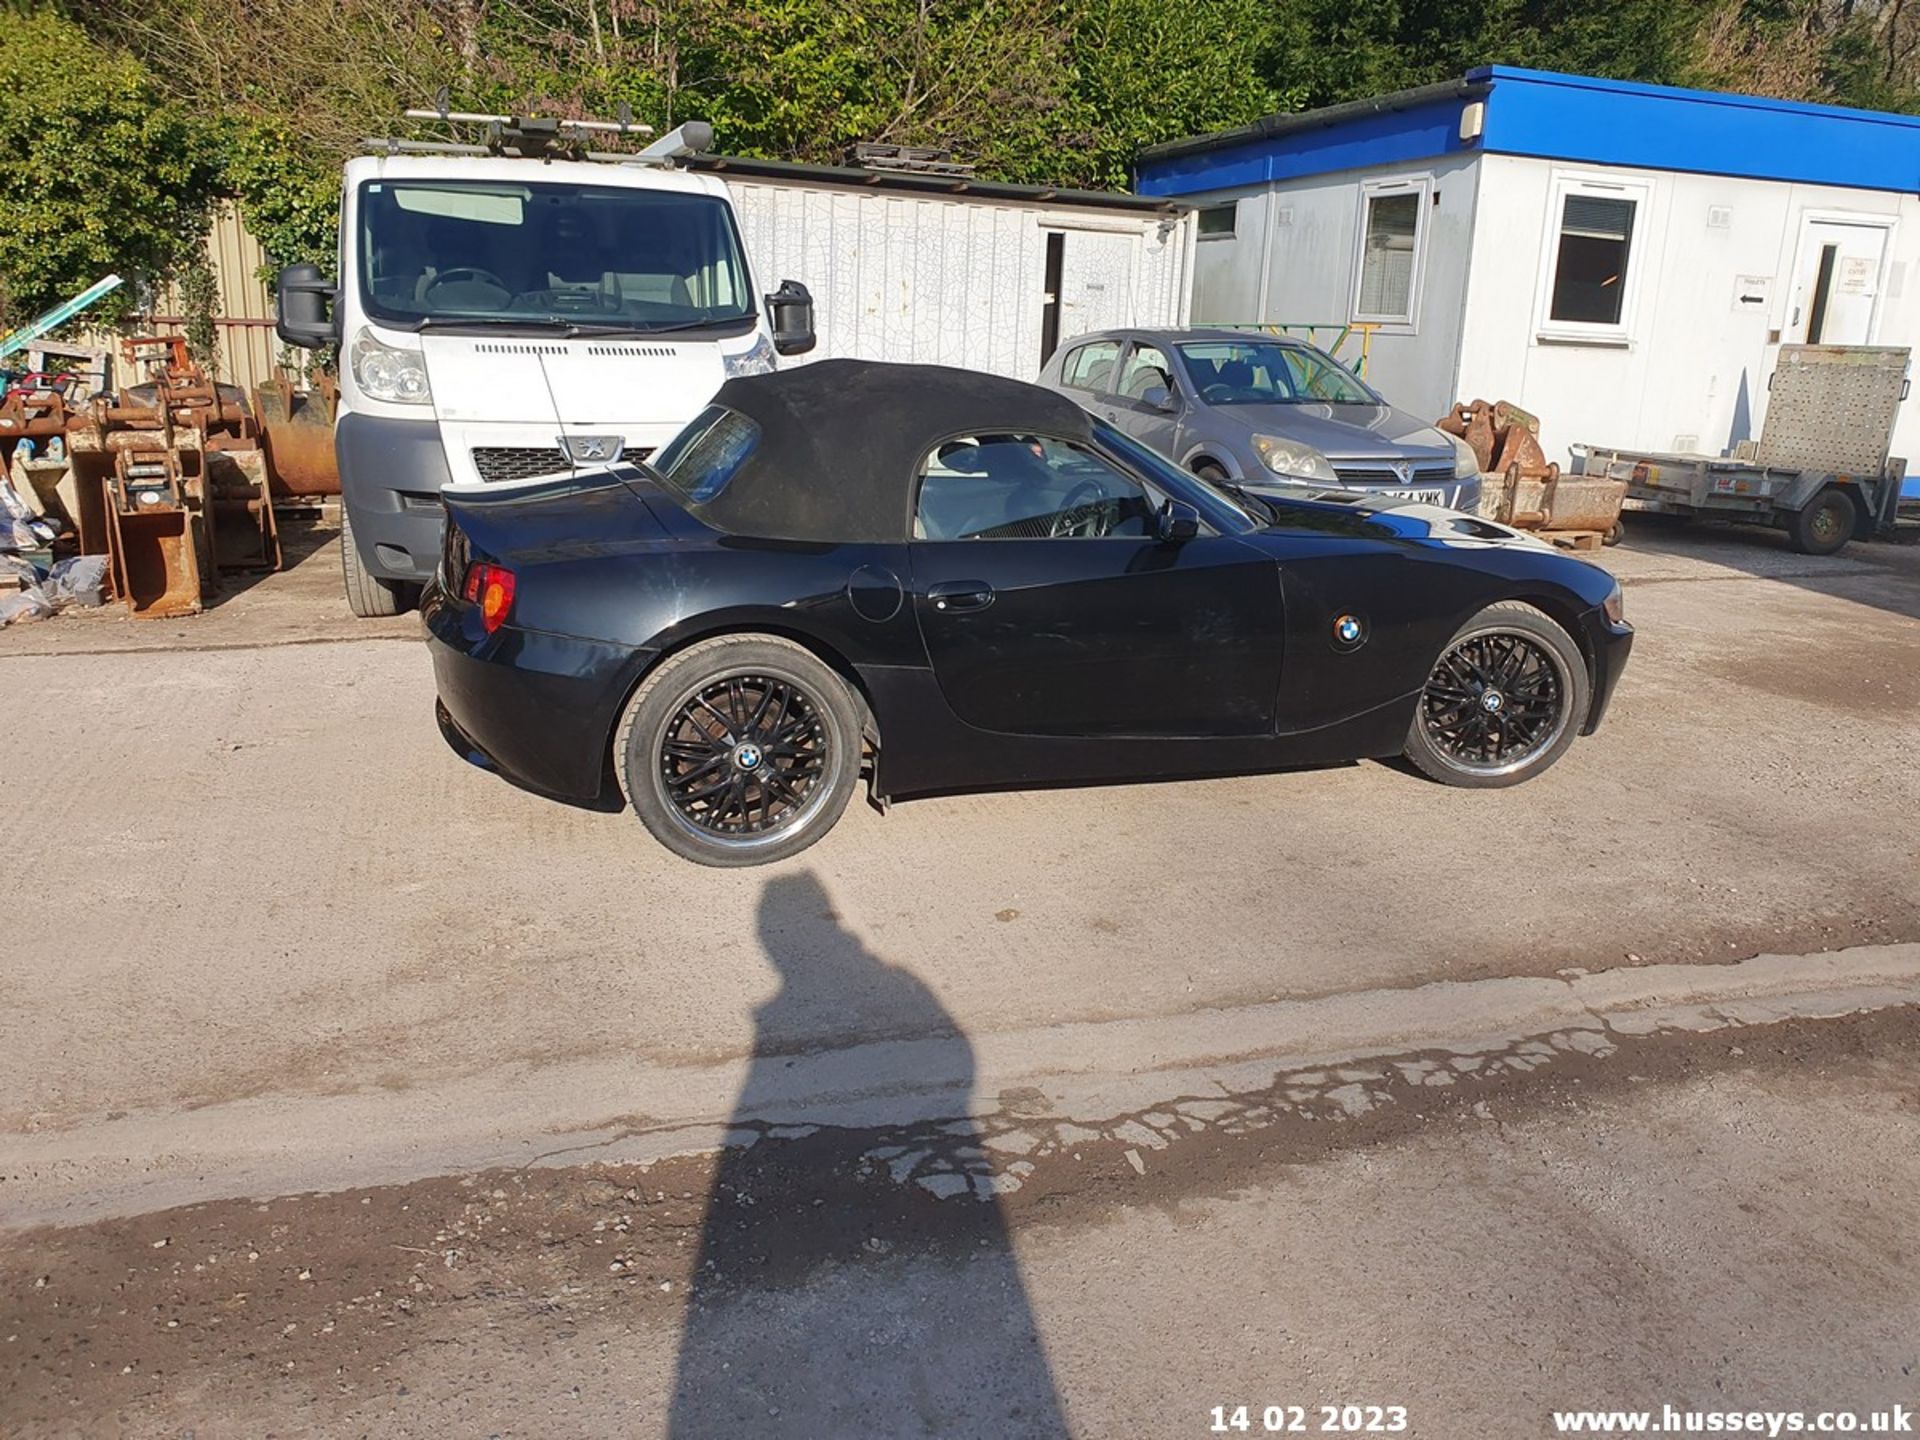 04/04 BMW Z4 3.0I SE - 2979cc 2dr Convertible (Black, 69k) - Image 8 of 44